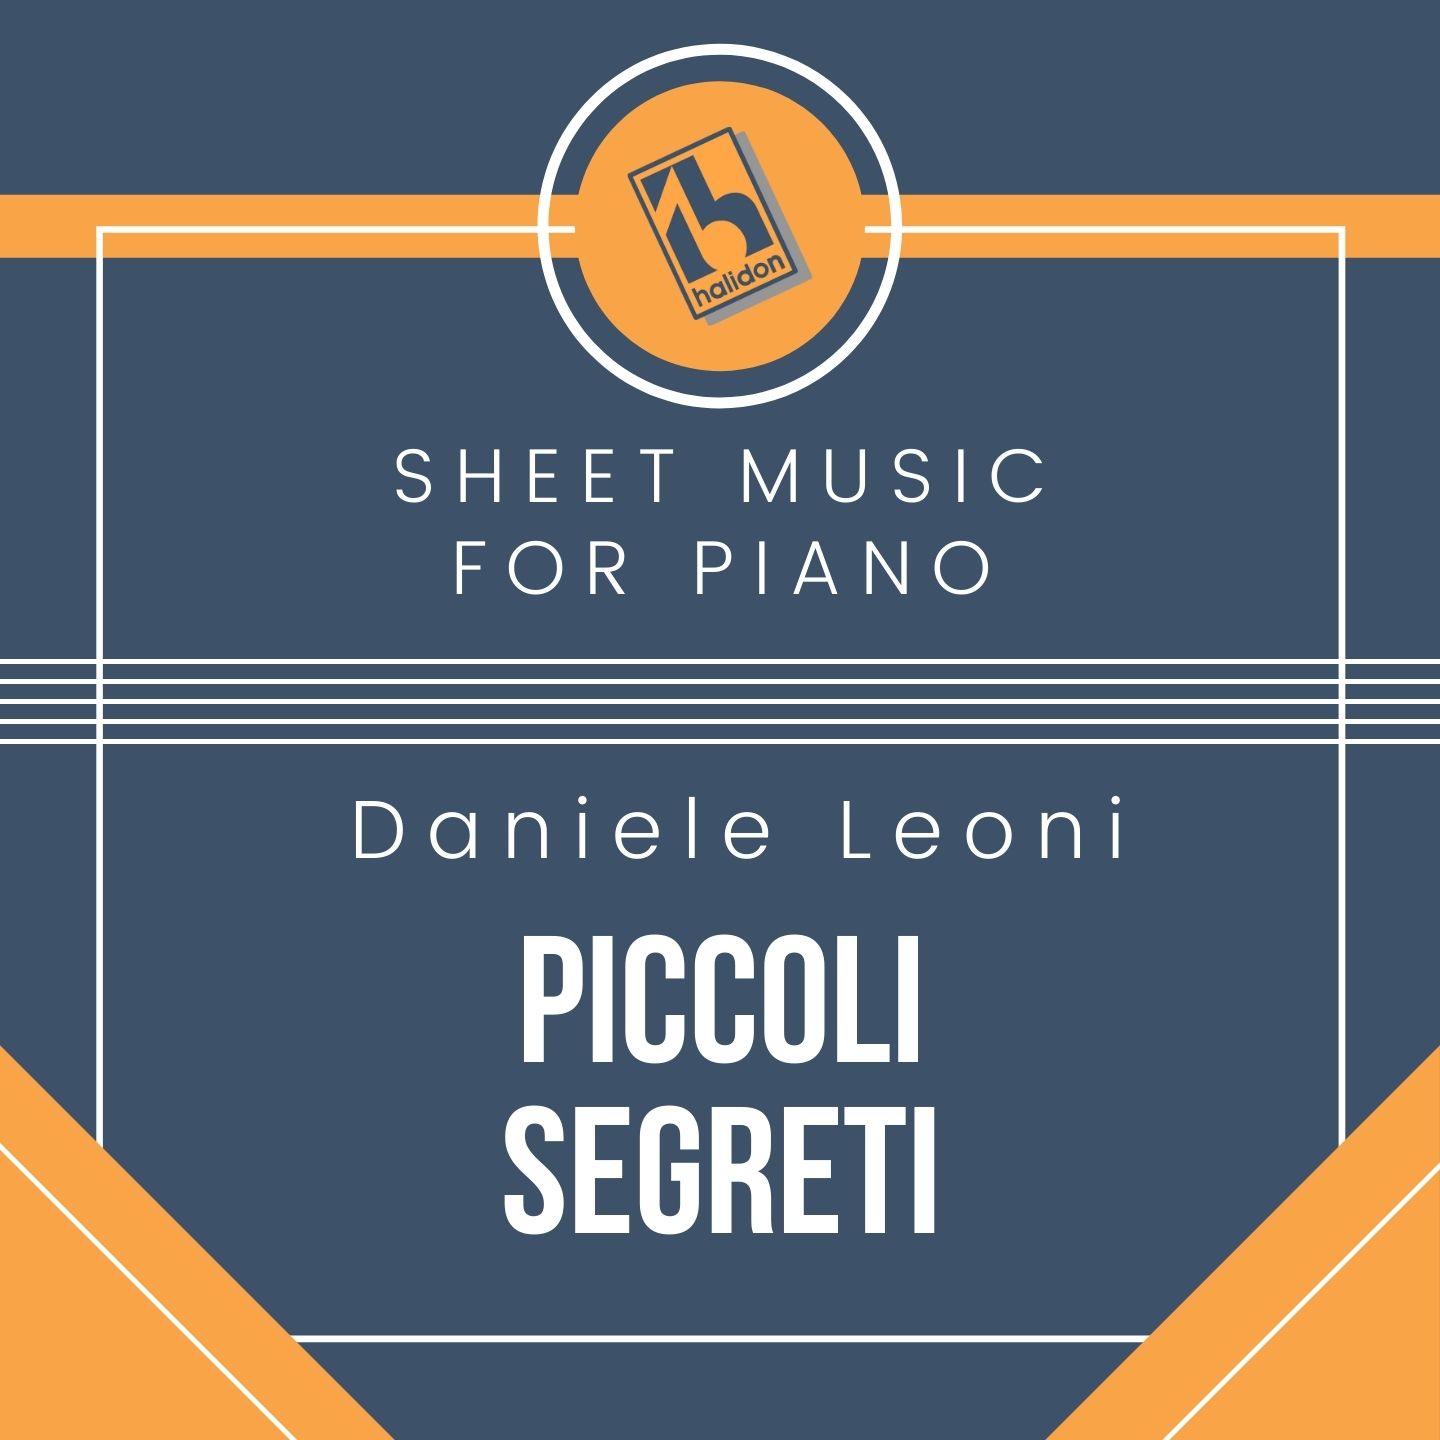 Daniele Leoni - Piccoli segreti (music sheet for piano)